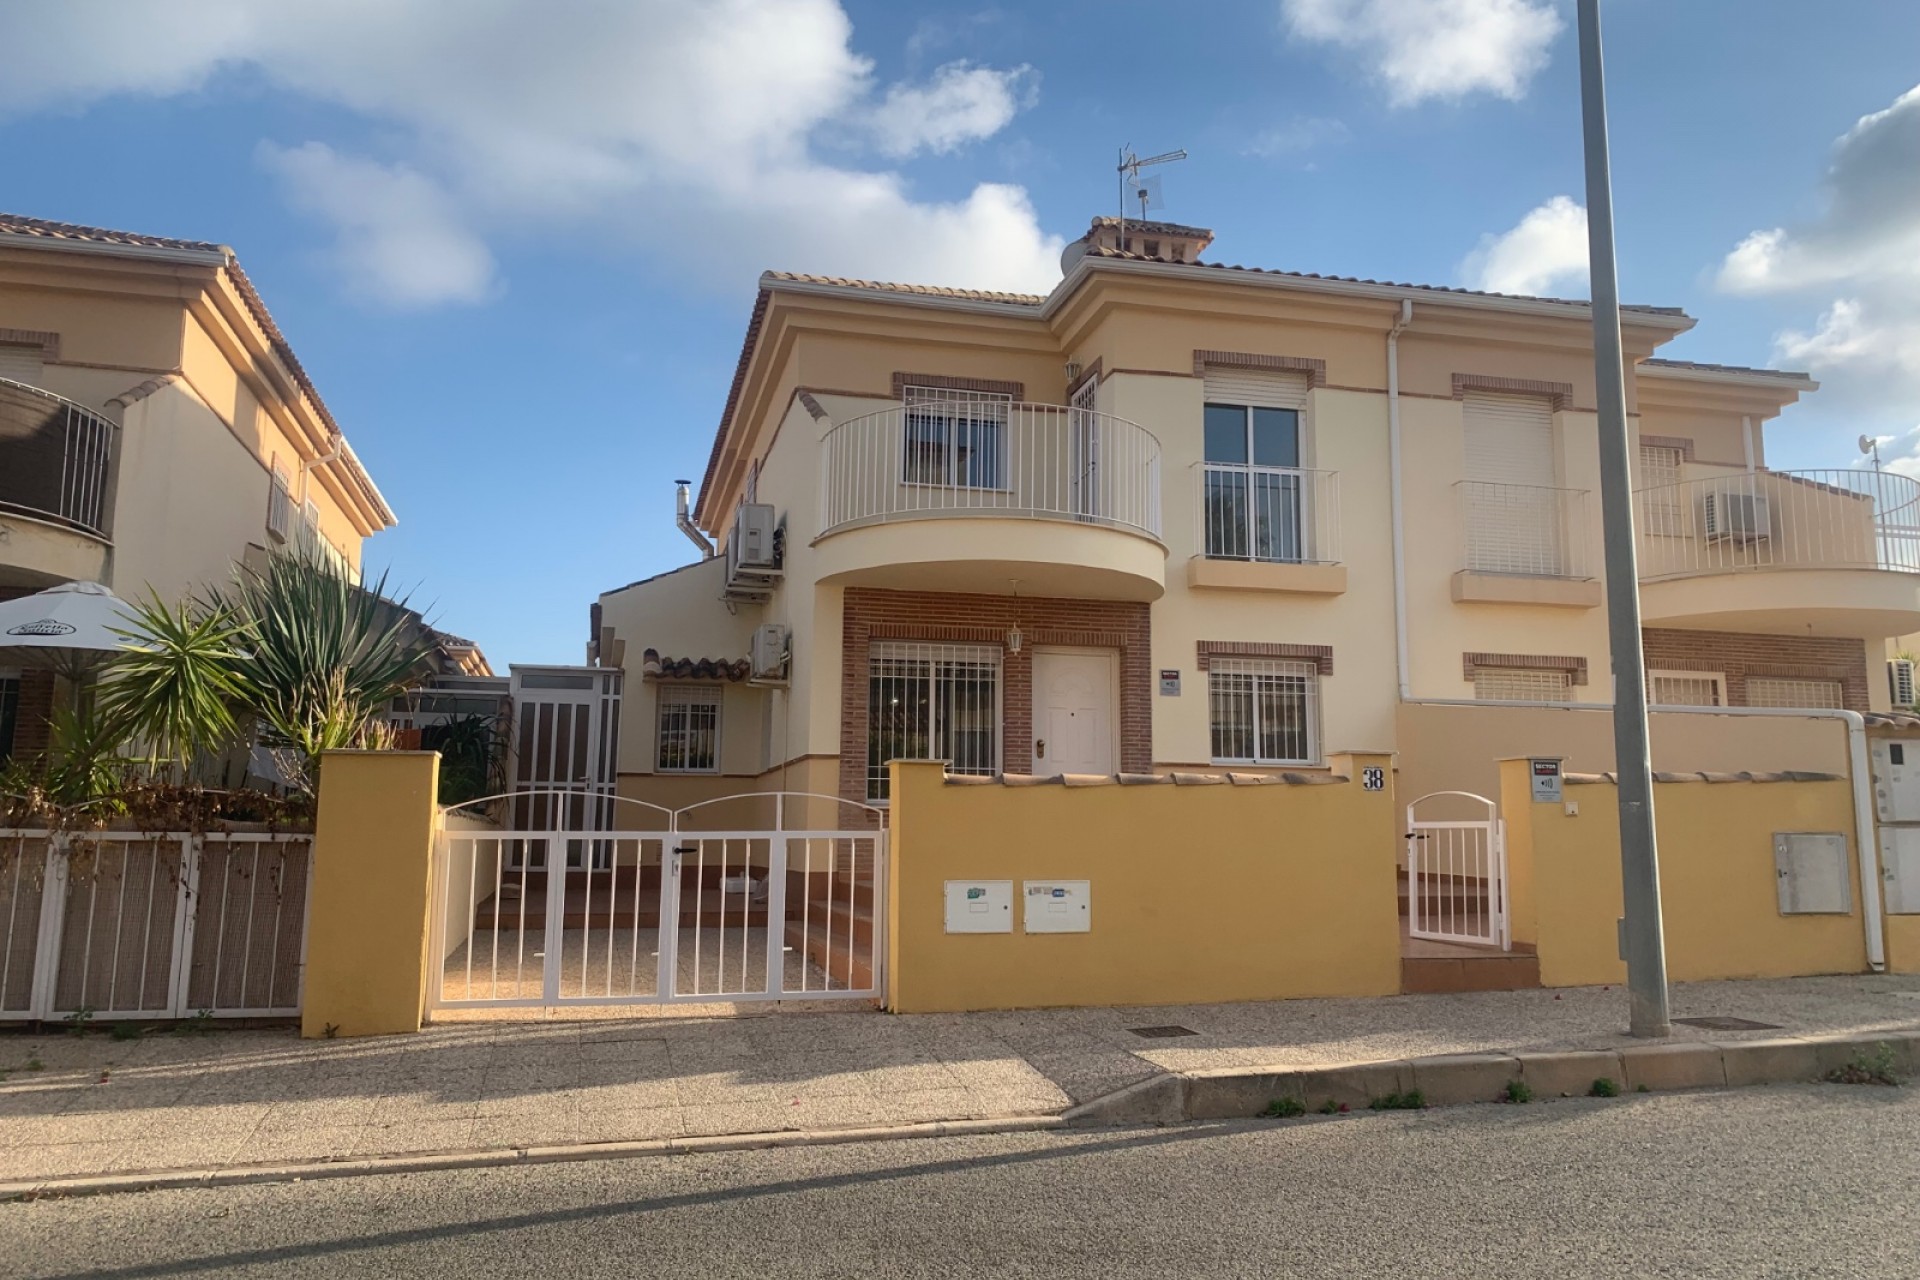 3 bedroom house / villa for sale in Villamartin, Costa Blanca